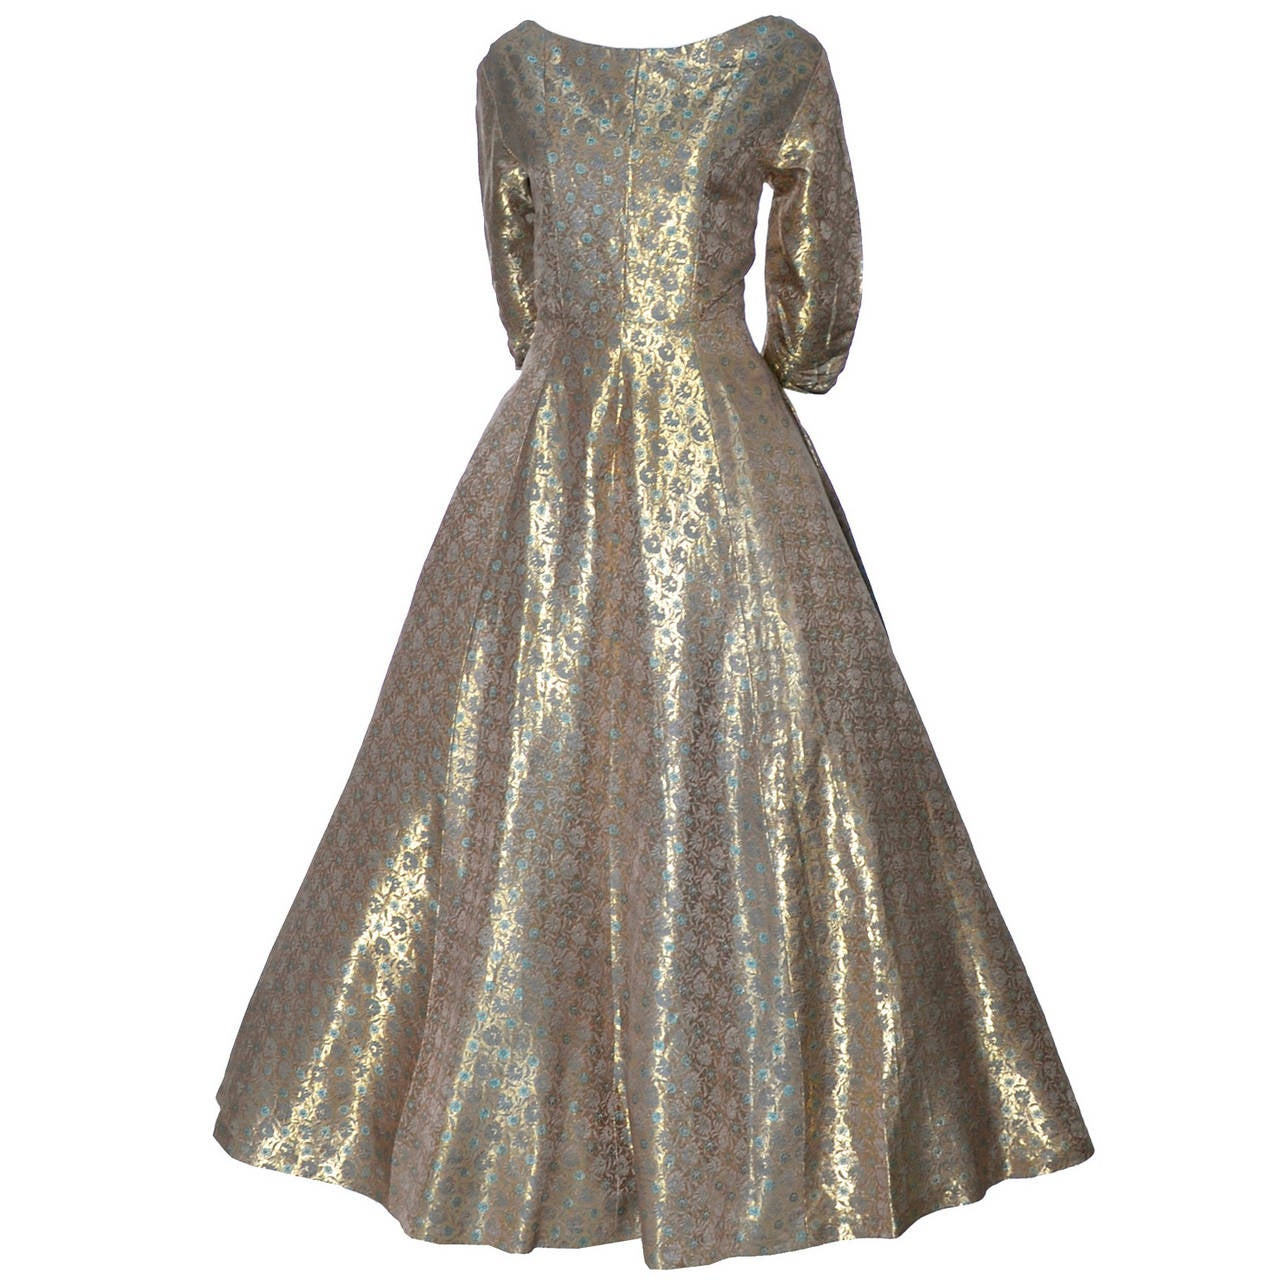 Hattie Carnegie 1950s Vintage Dress Gold Metallic Lame Blue Floral Evening Gown